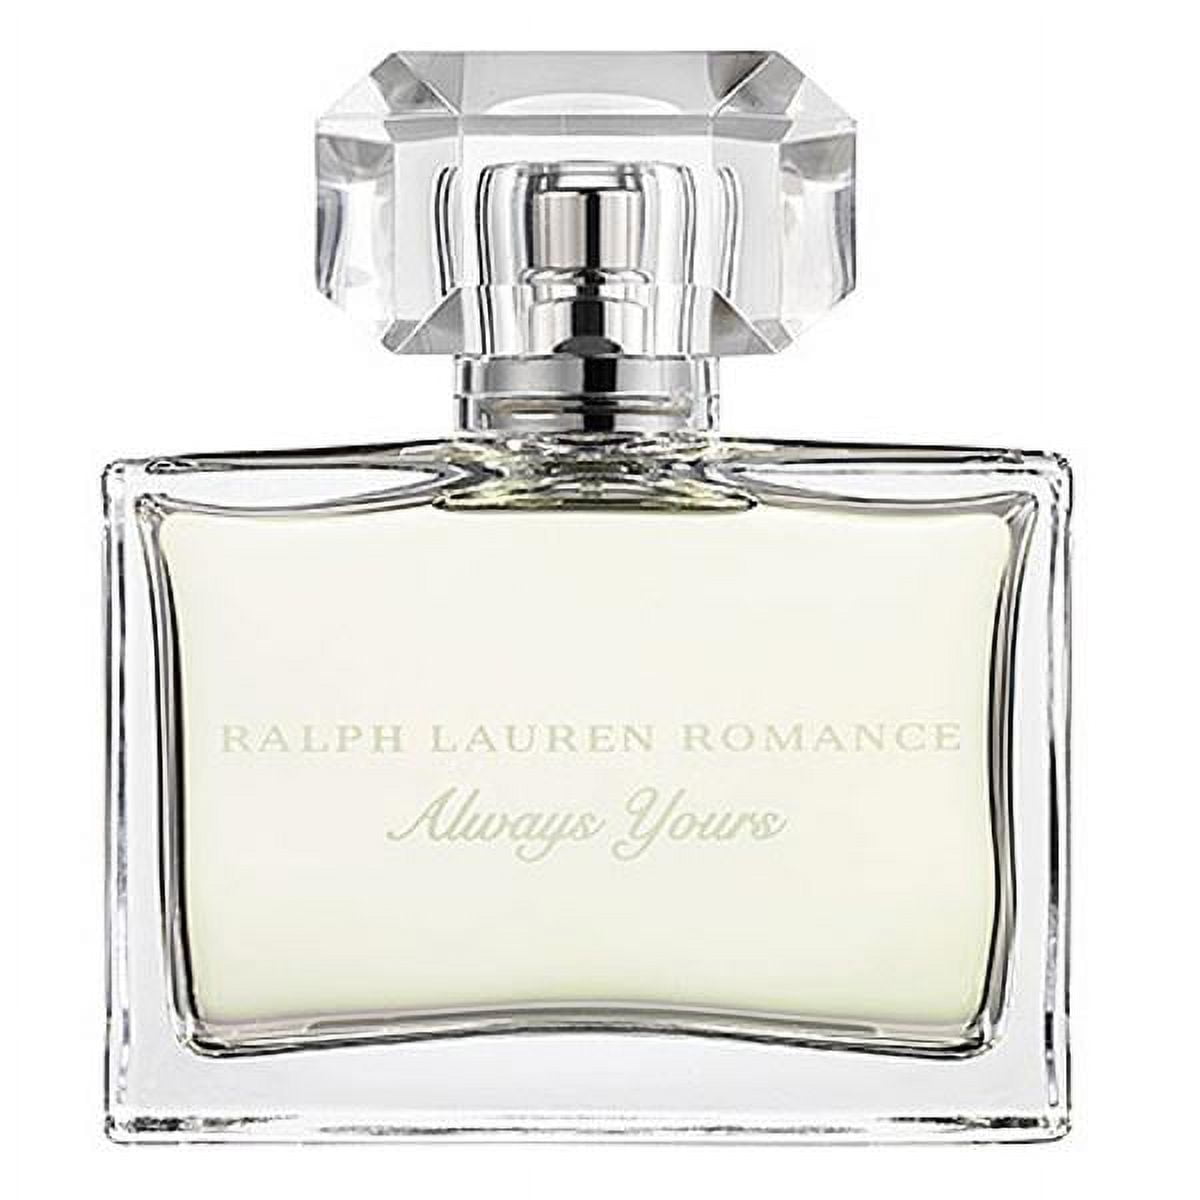 Ralph Lauren Romance Always Yours Eau De Parfum Spray 2.5 oz/ 75 ml NIB  RARE